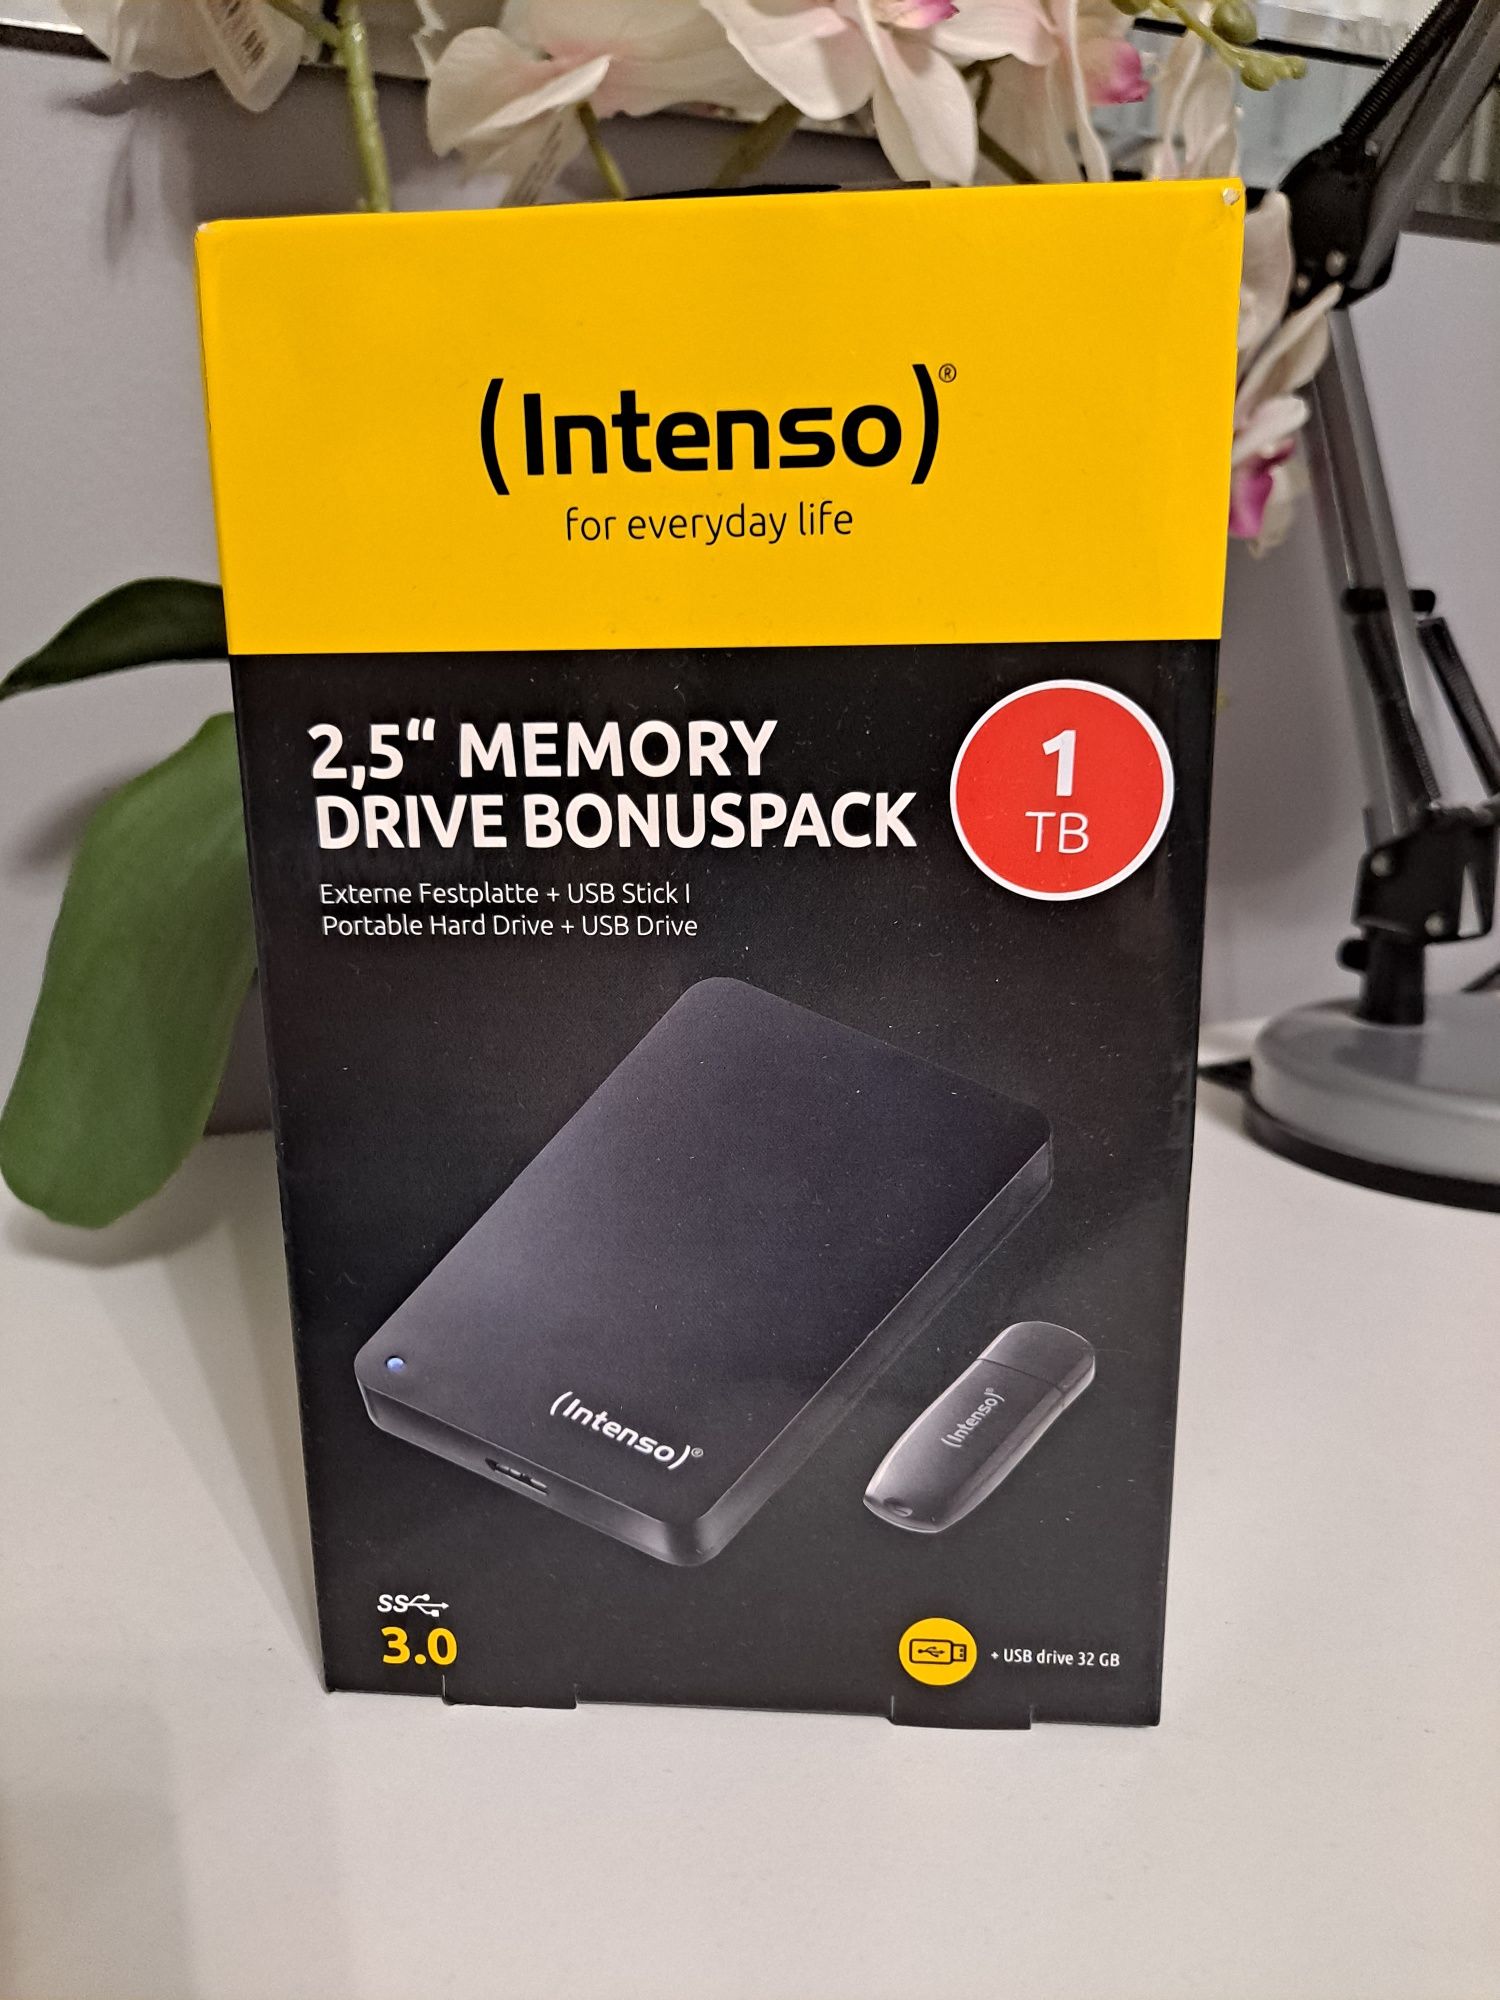 Dysk Intenso 2,5" memorydrive bonuspack 1TB